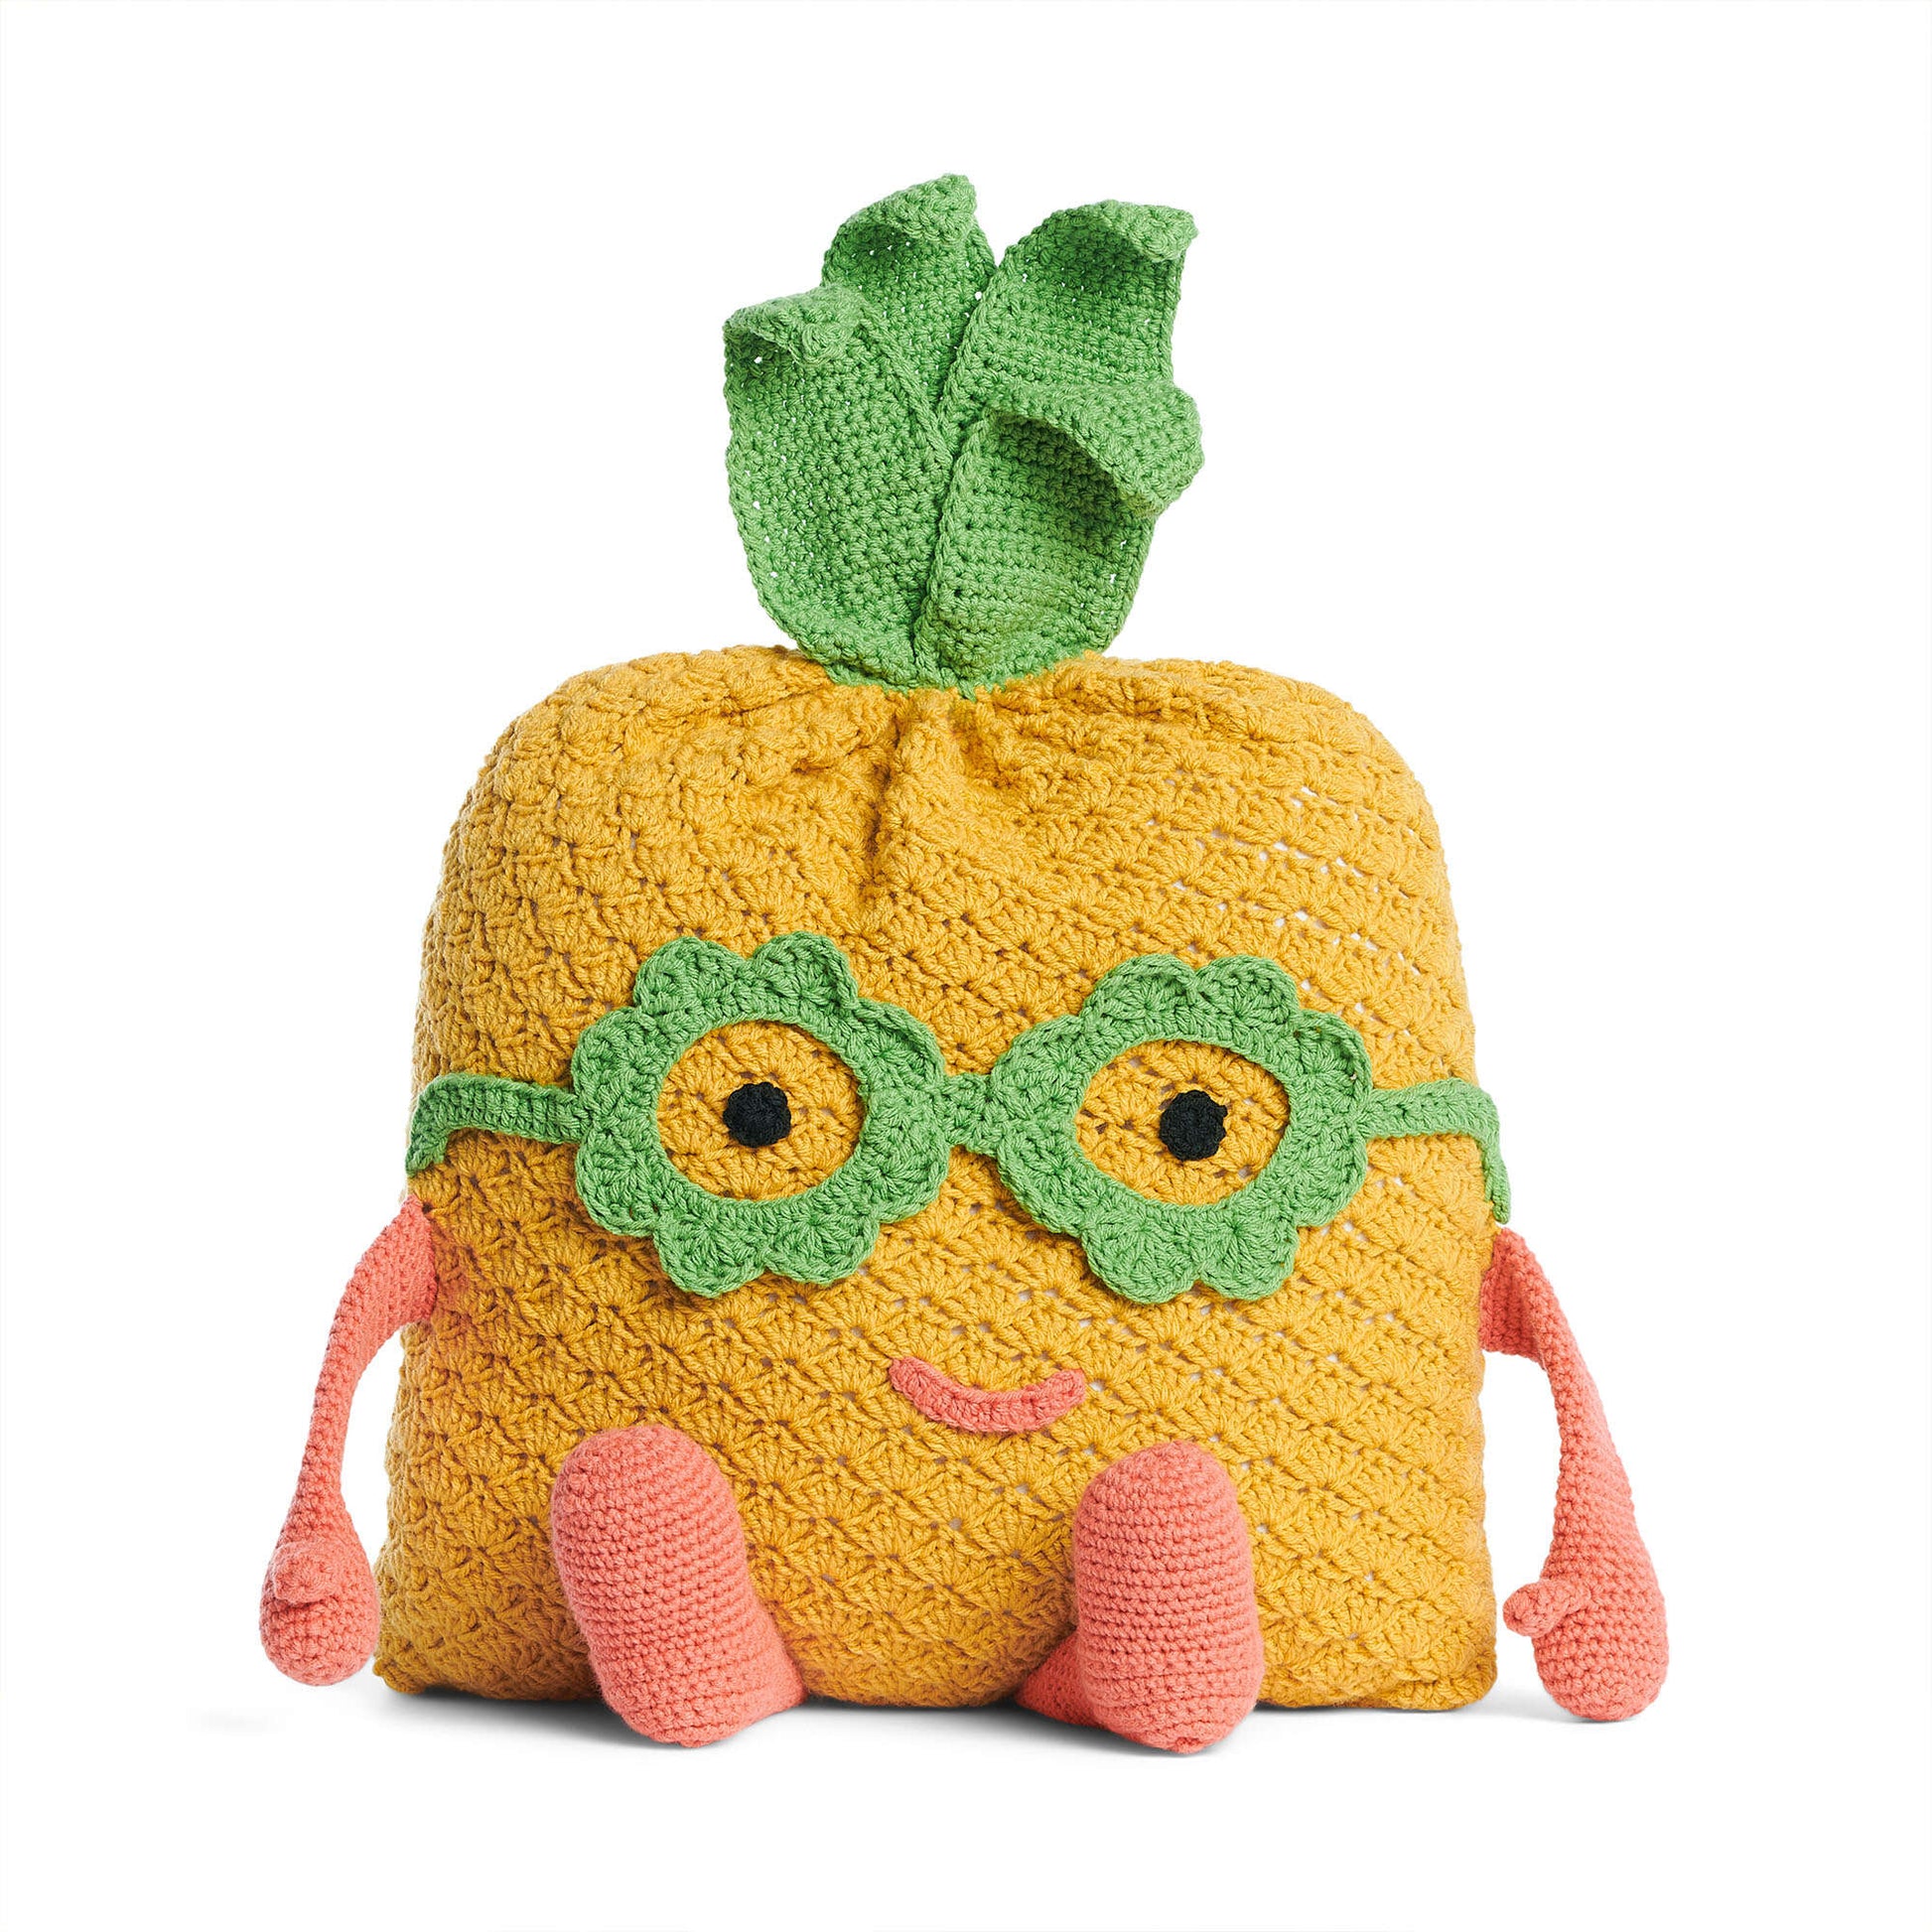 Caron Pineapple Crochet Study Buddy